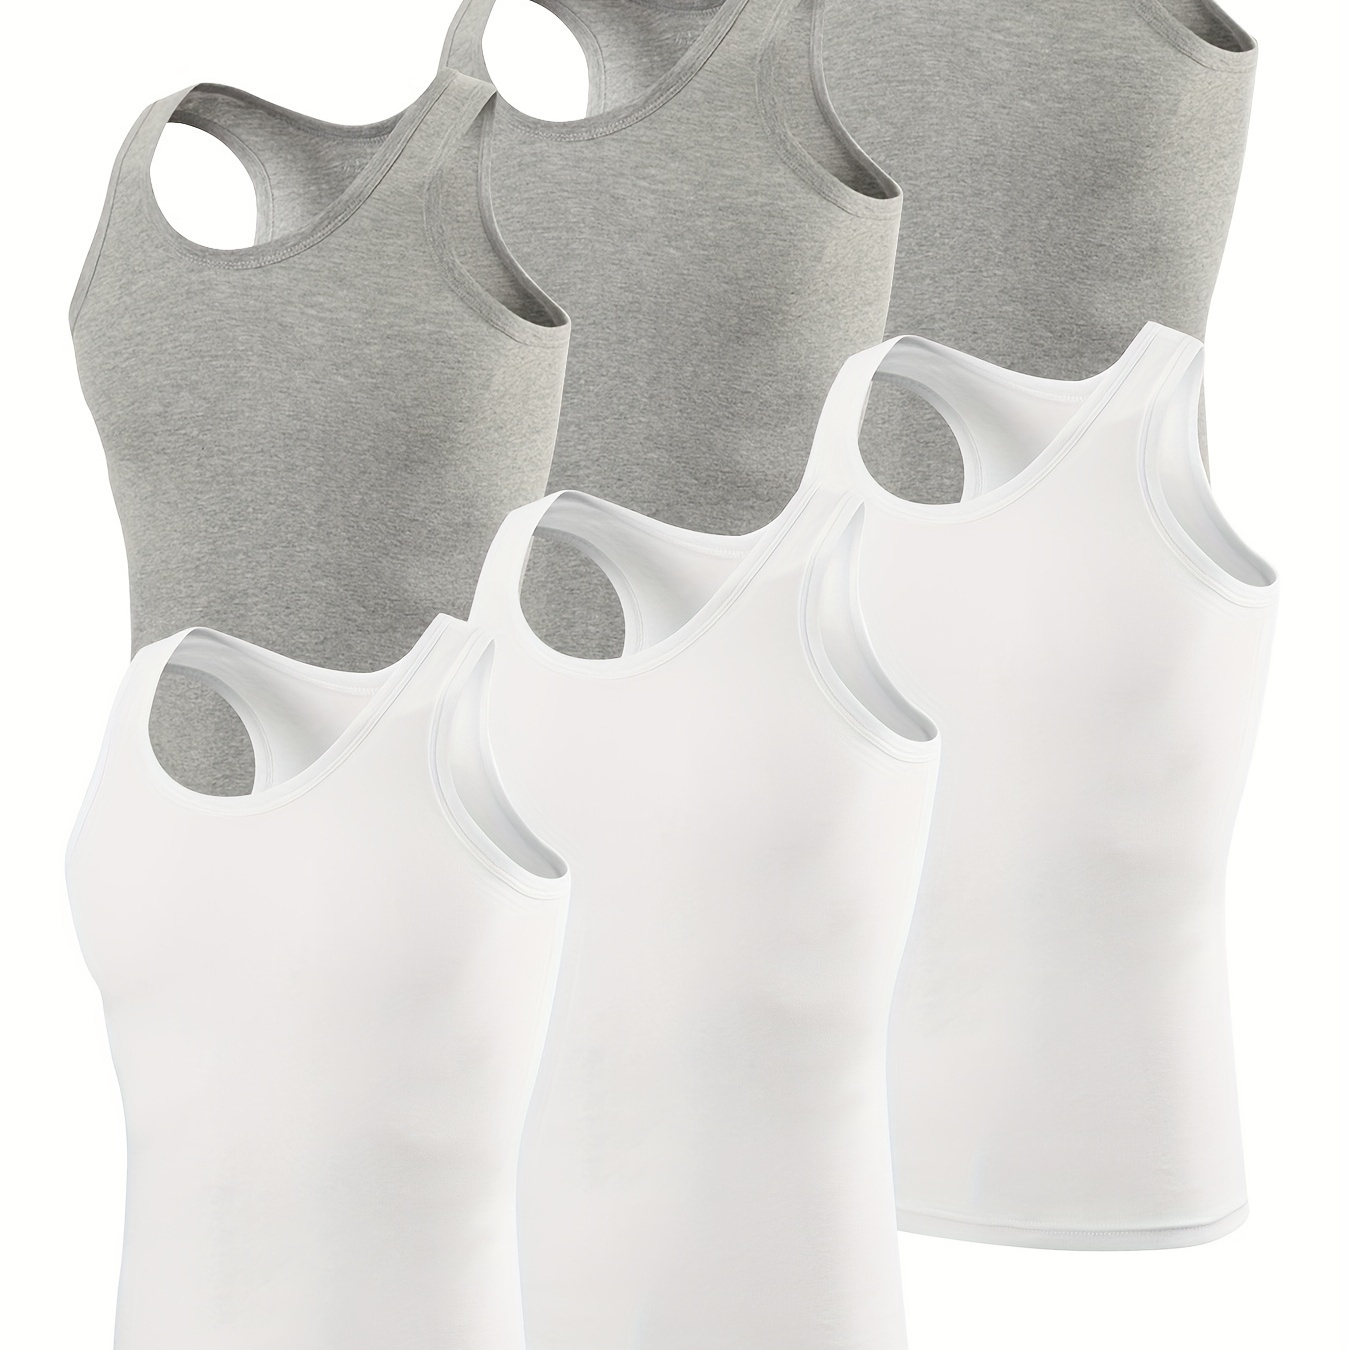 

6pcs Men's Vest Summer, Thin Breathable Solid Bottoming Outside Wear Vest, Cotton Sleeveless Sports Vest